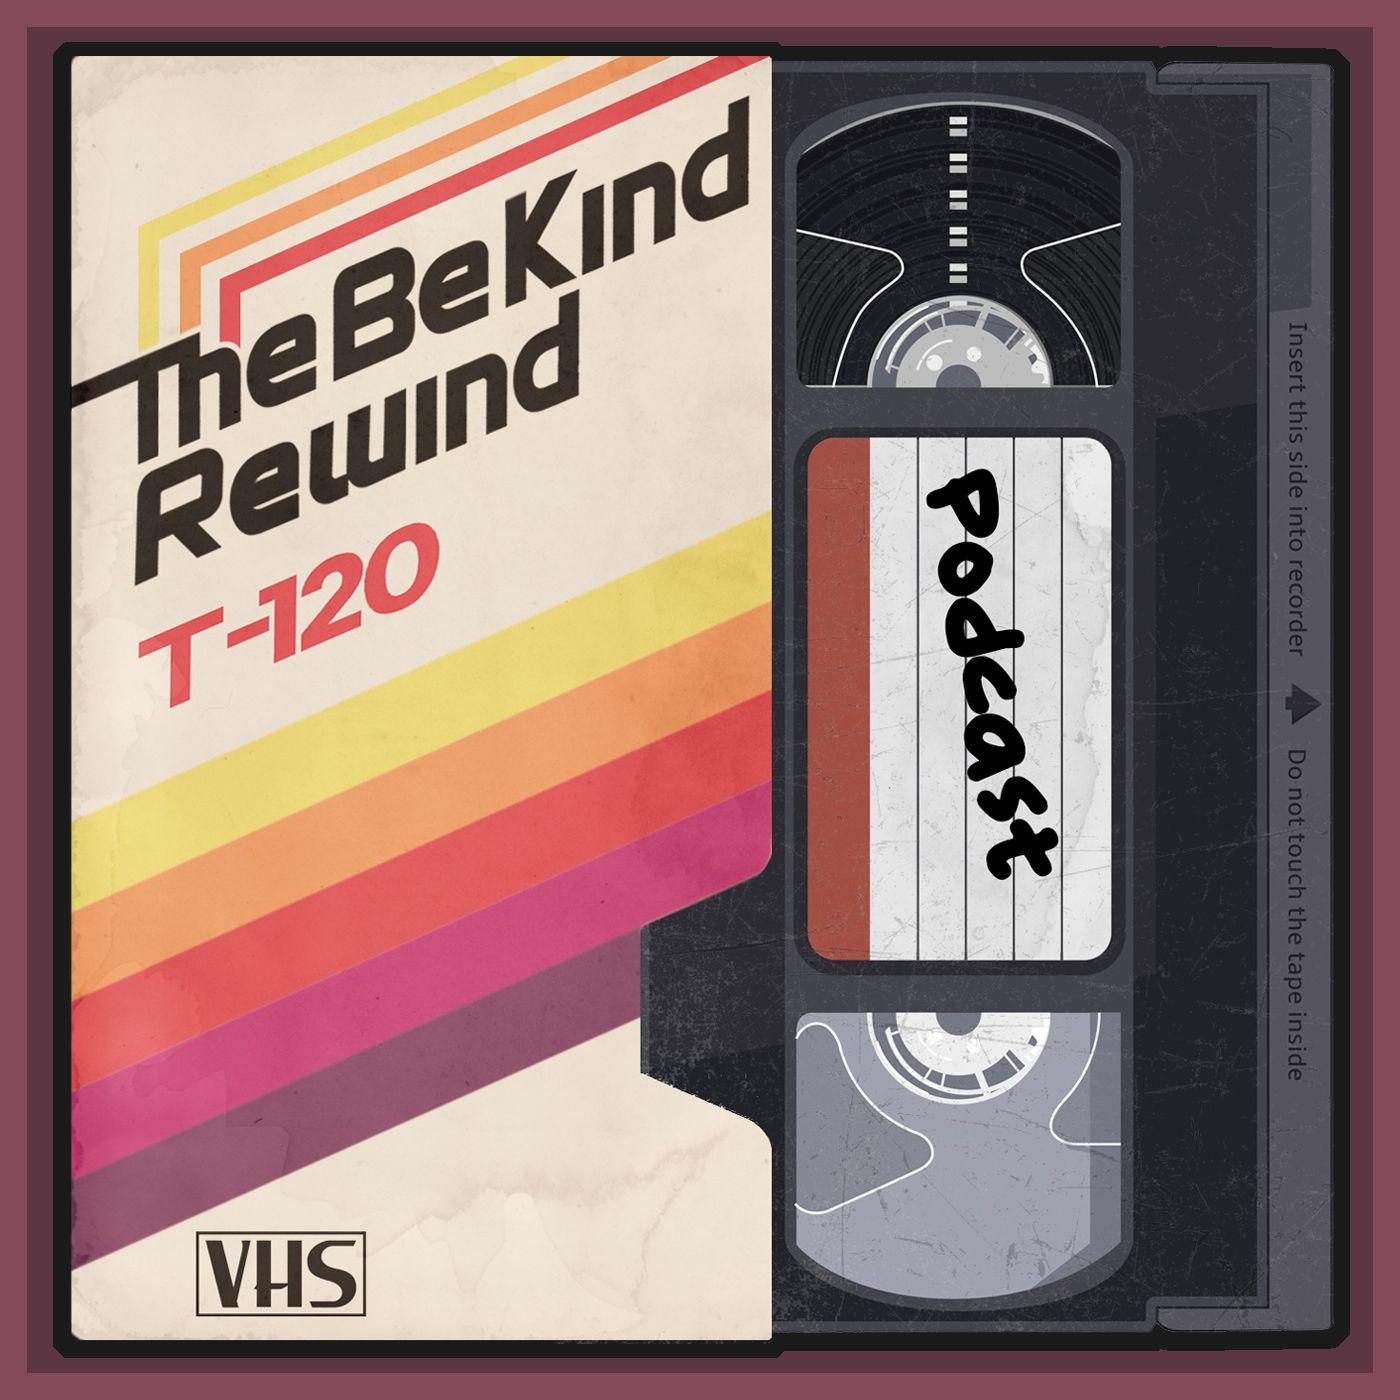 The Be Kind Rewind